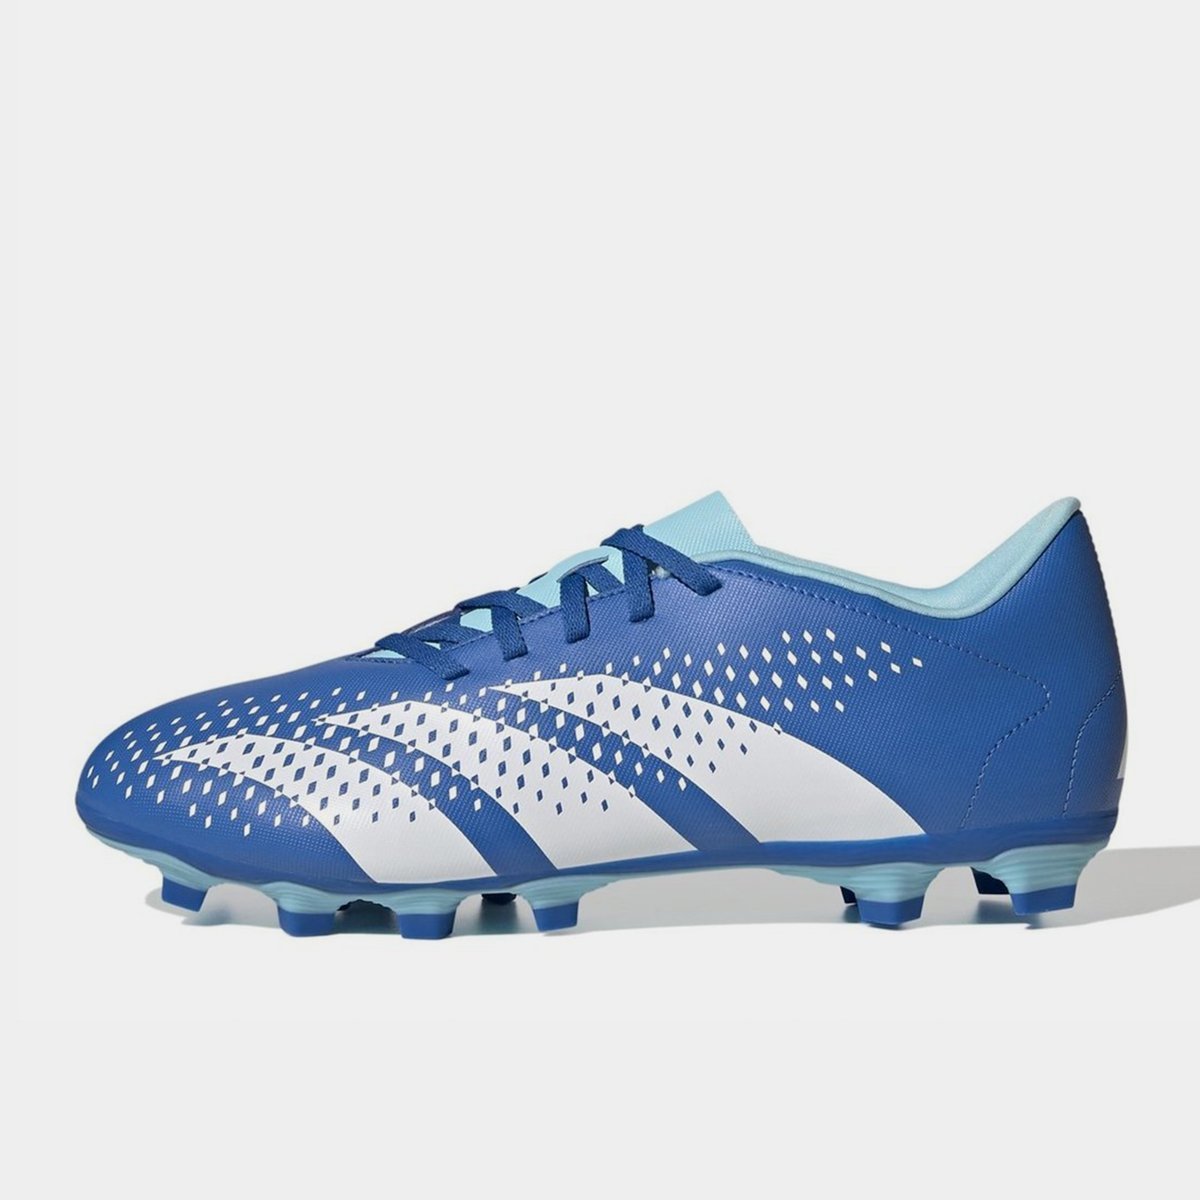 Lovell Soccer – Football Boots, Shirts, Training & Equipment